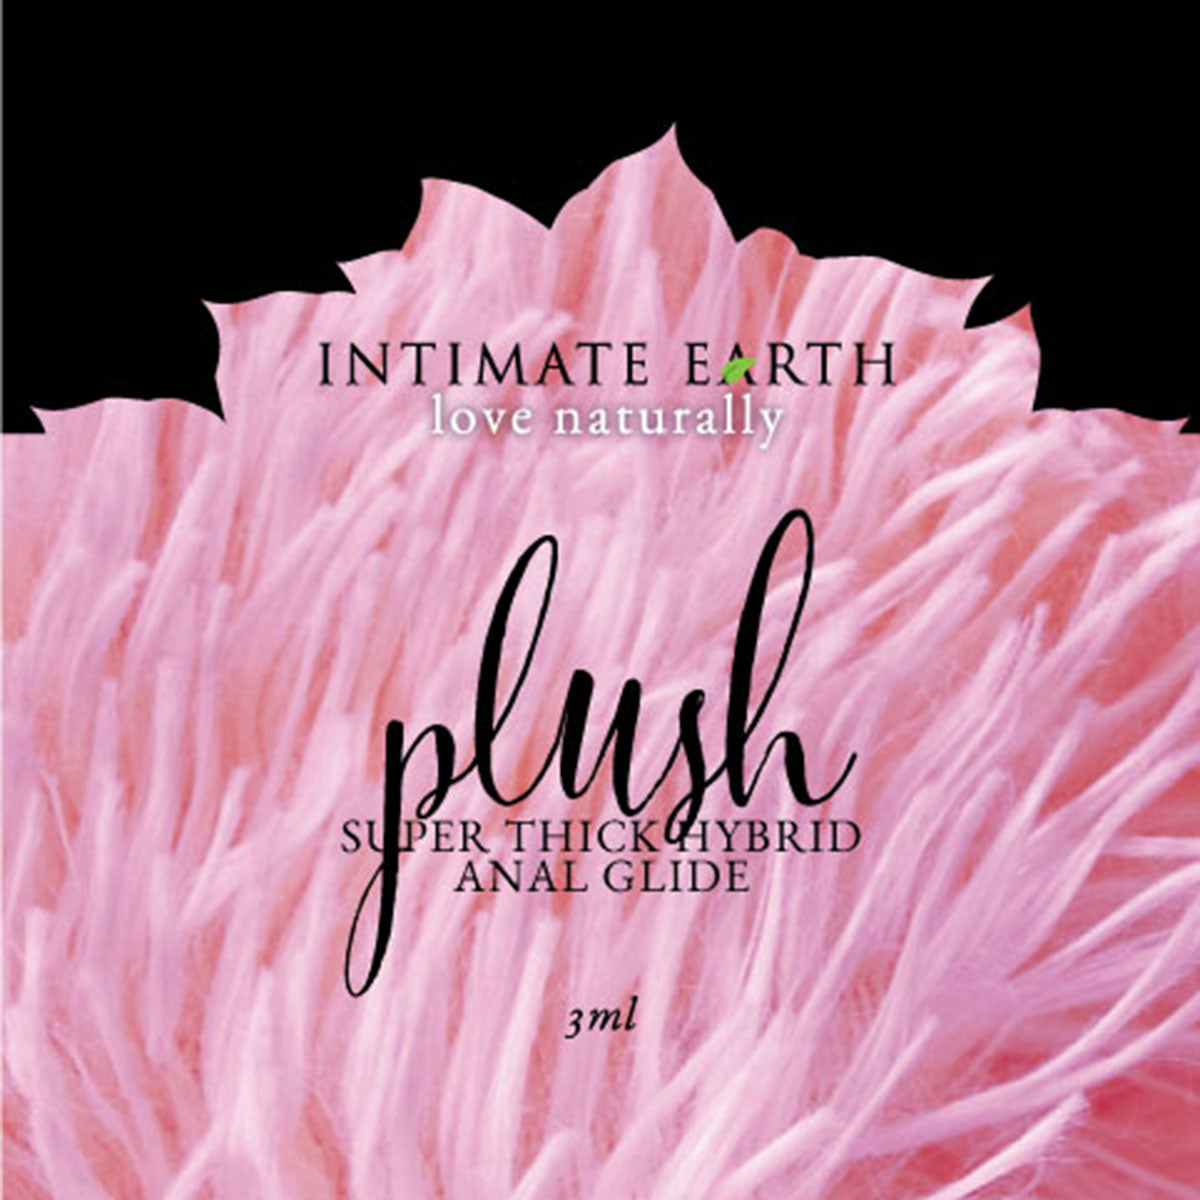 Intimate Earth Plush Hybrid Anal Glide 3ml Foil SINGLE